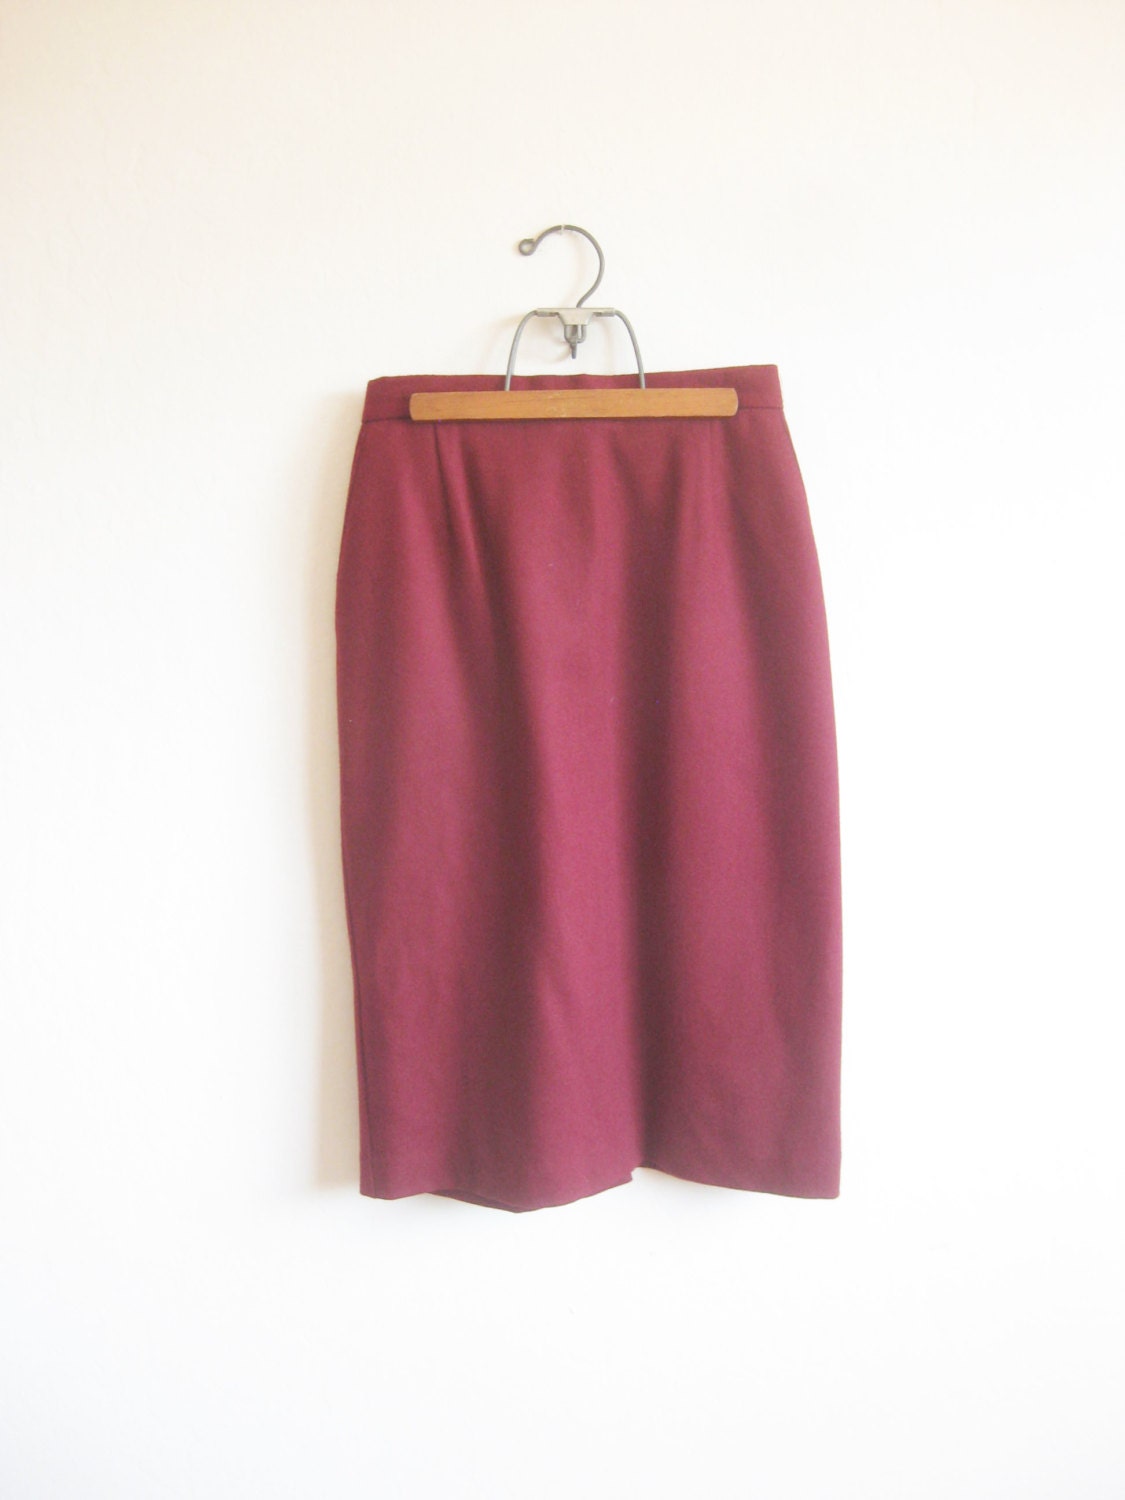 Vintage 1980s Merino Wool Skirt Womens Small S by OliverandAlexa